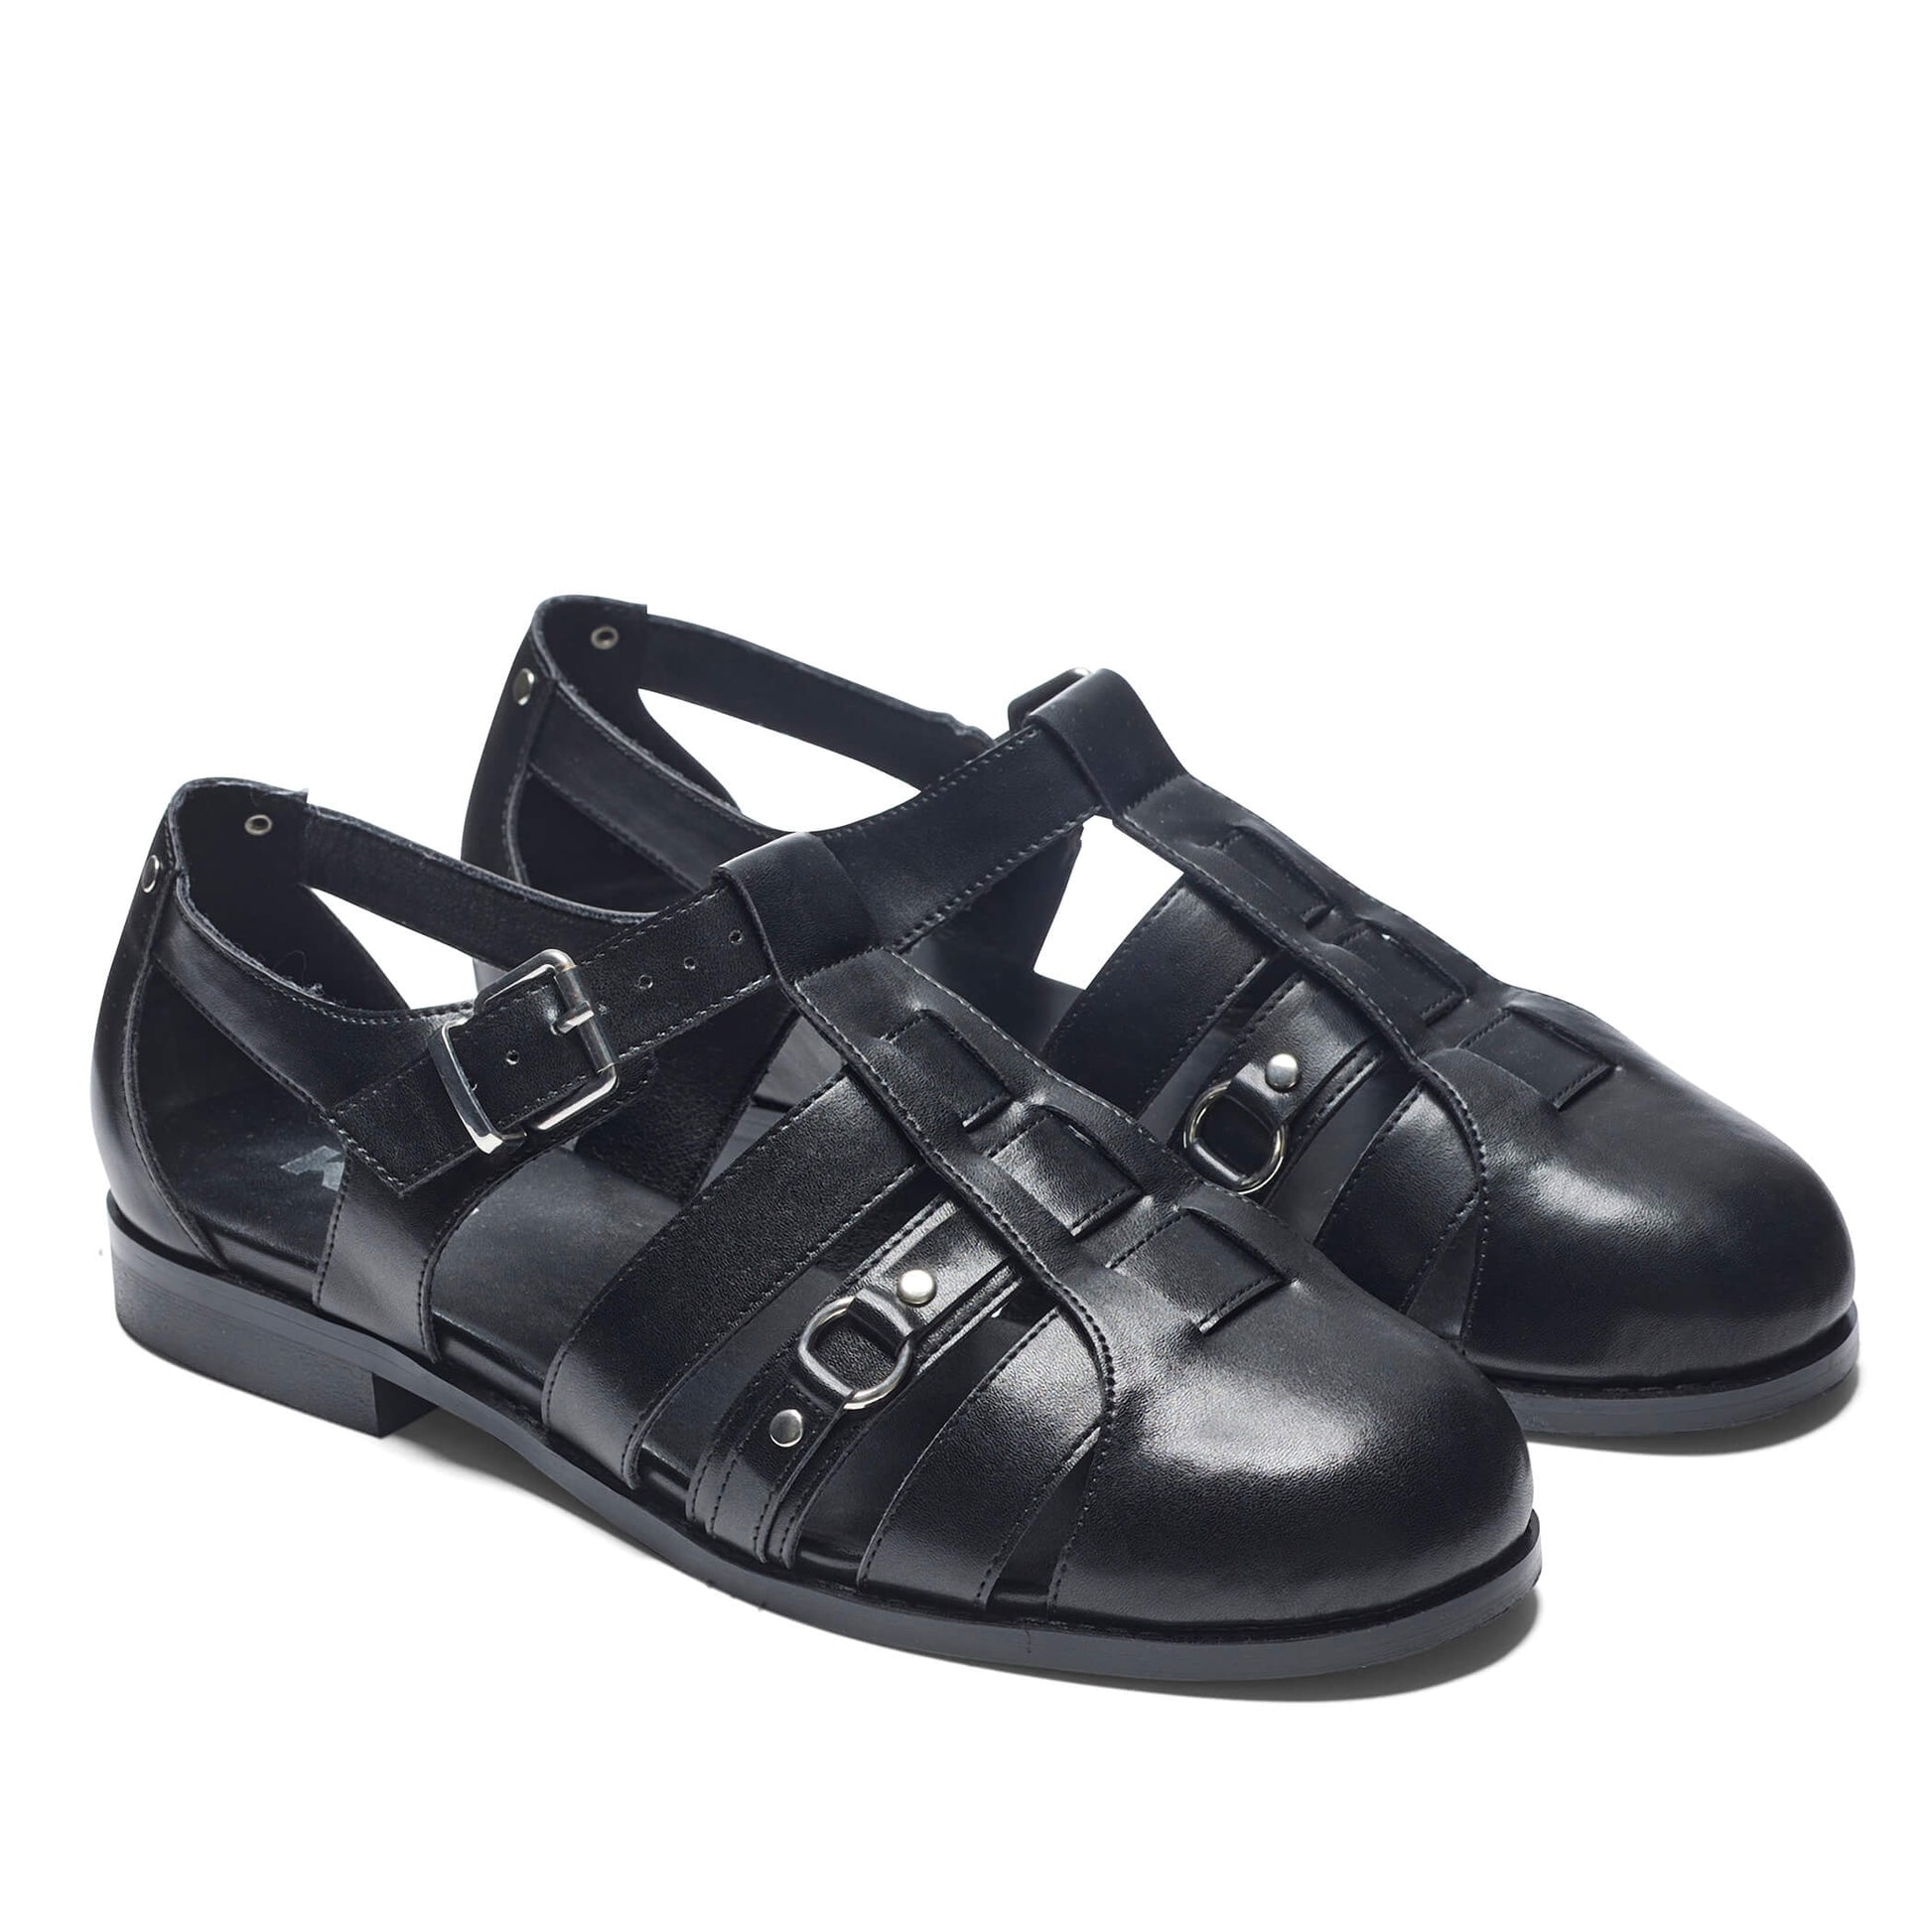 Gilgen Men's Cutout Shoes - KOI Footwear - Black - Three-Quarter View